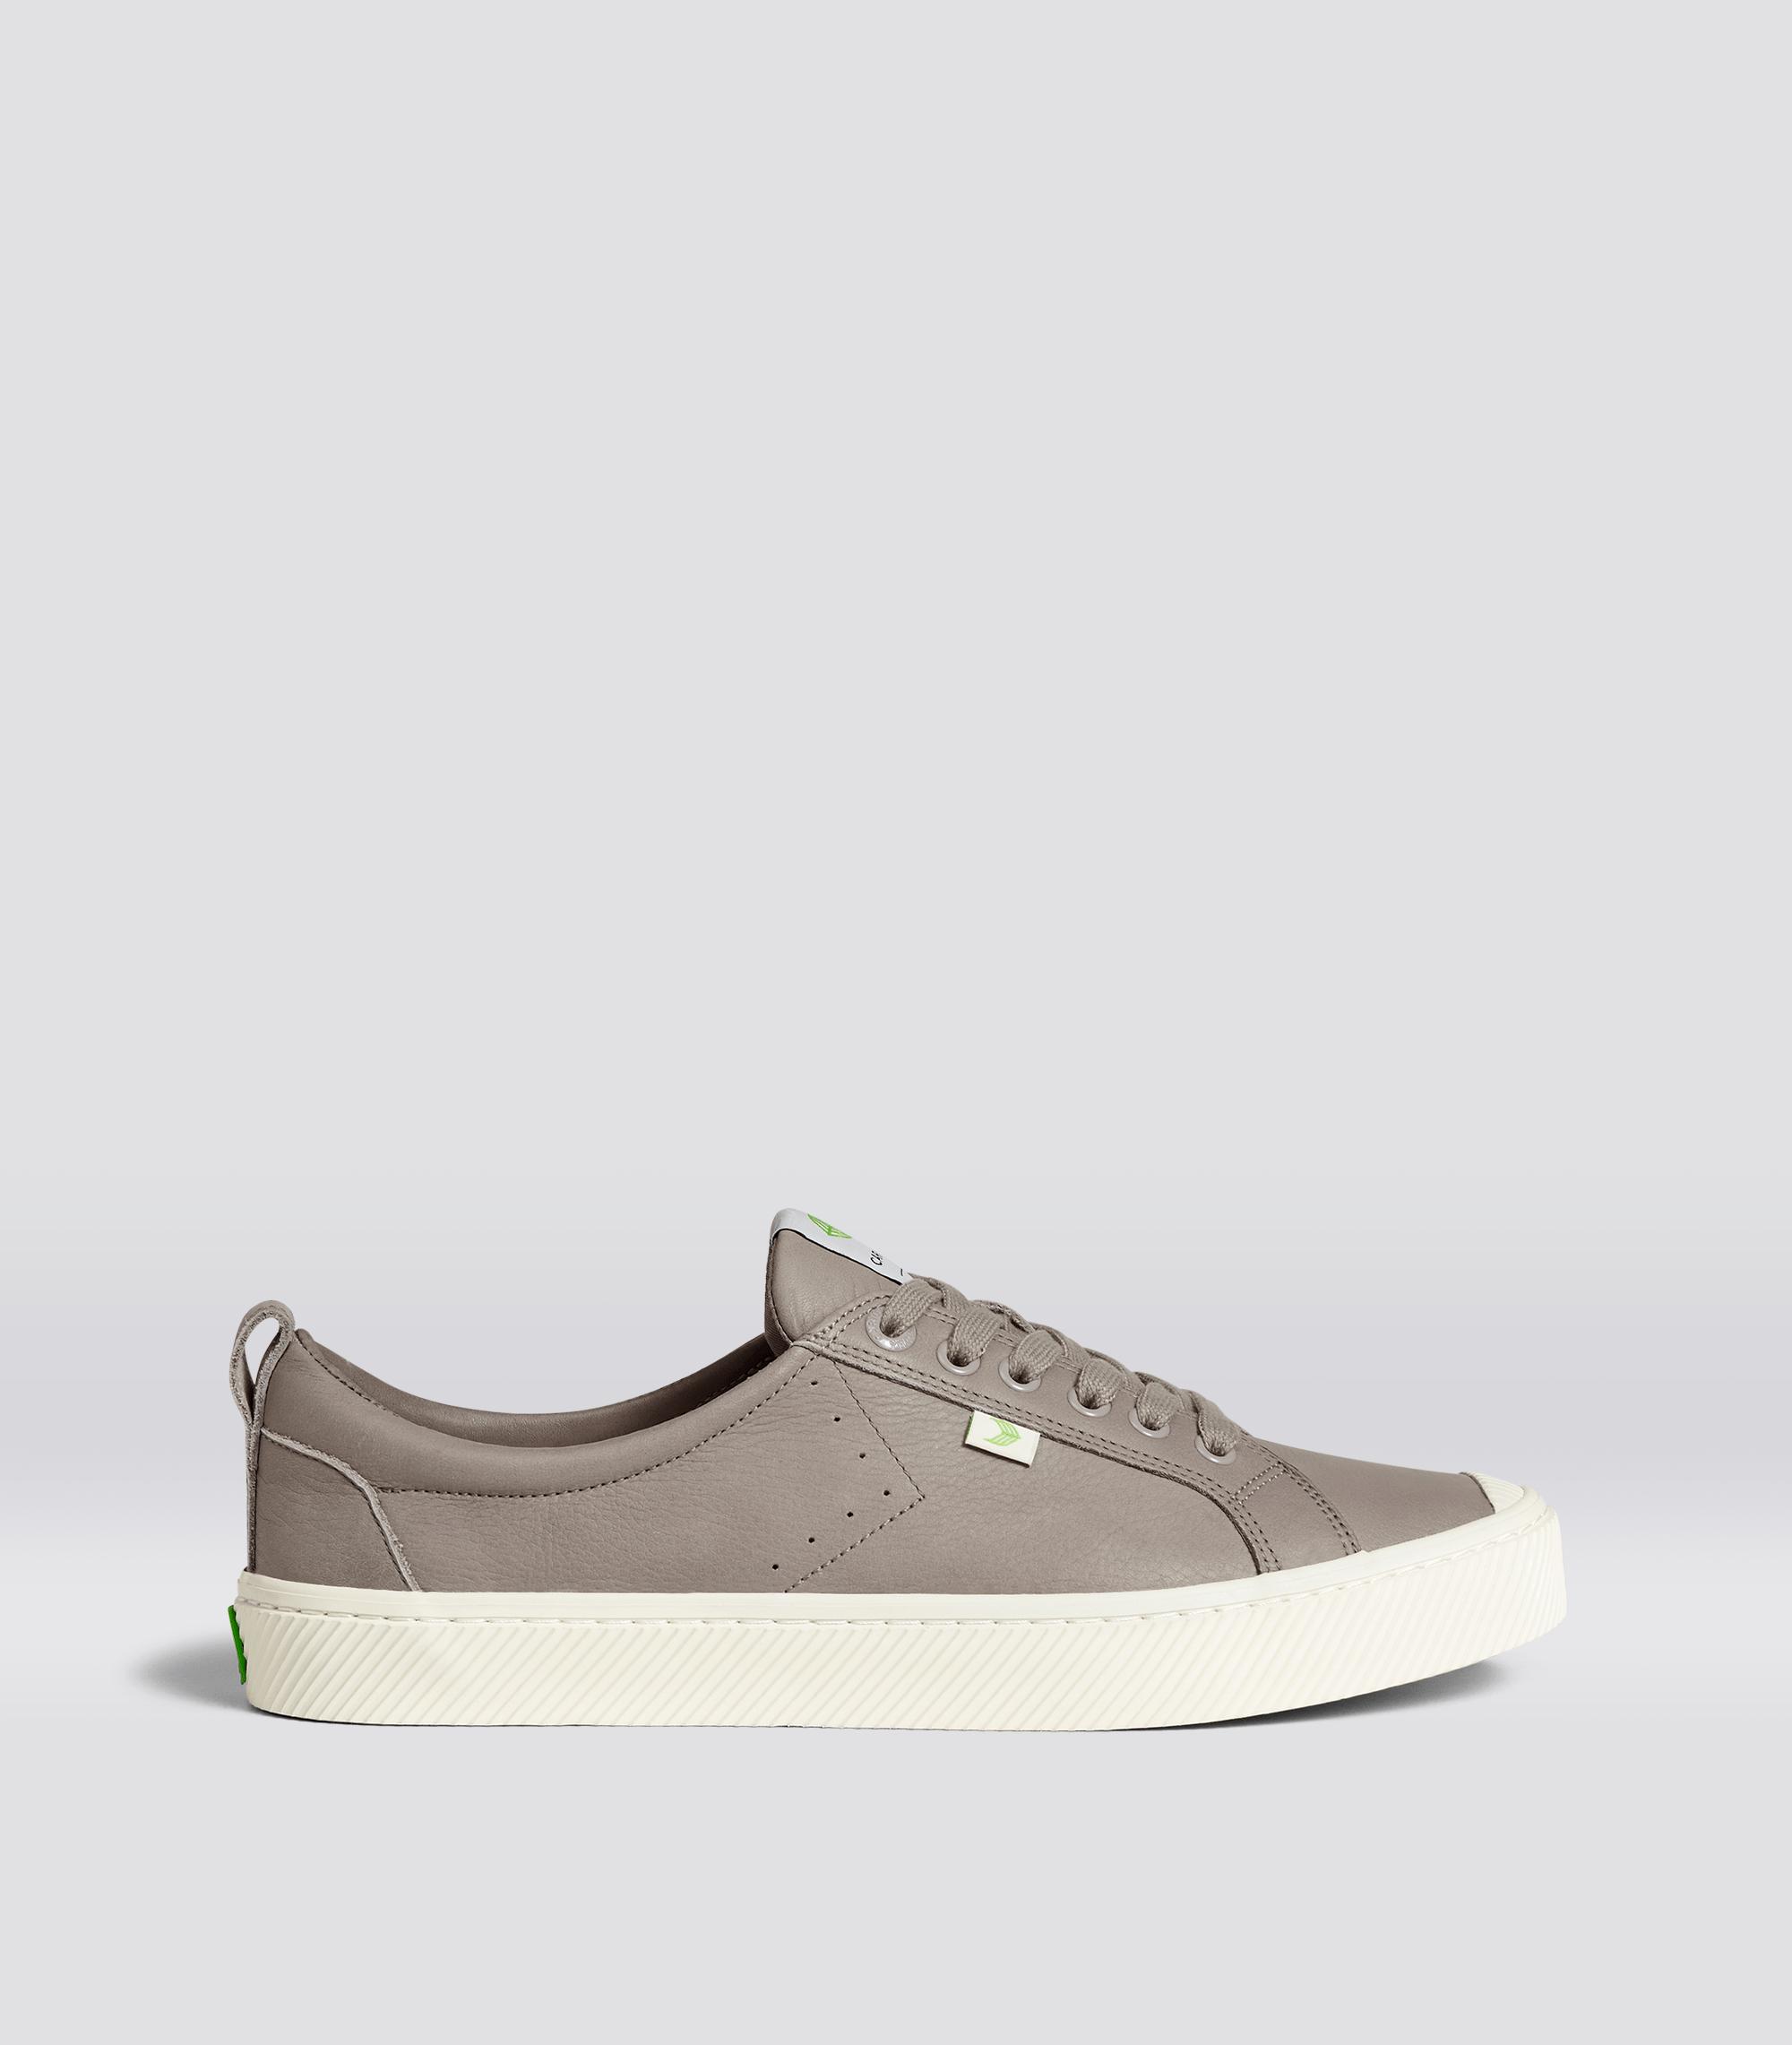 CARIUMA Oca Low Premium Leather Sneaker in Gray | Lyst